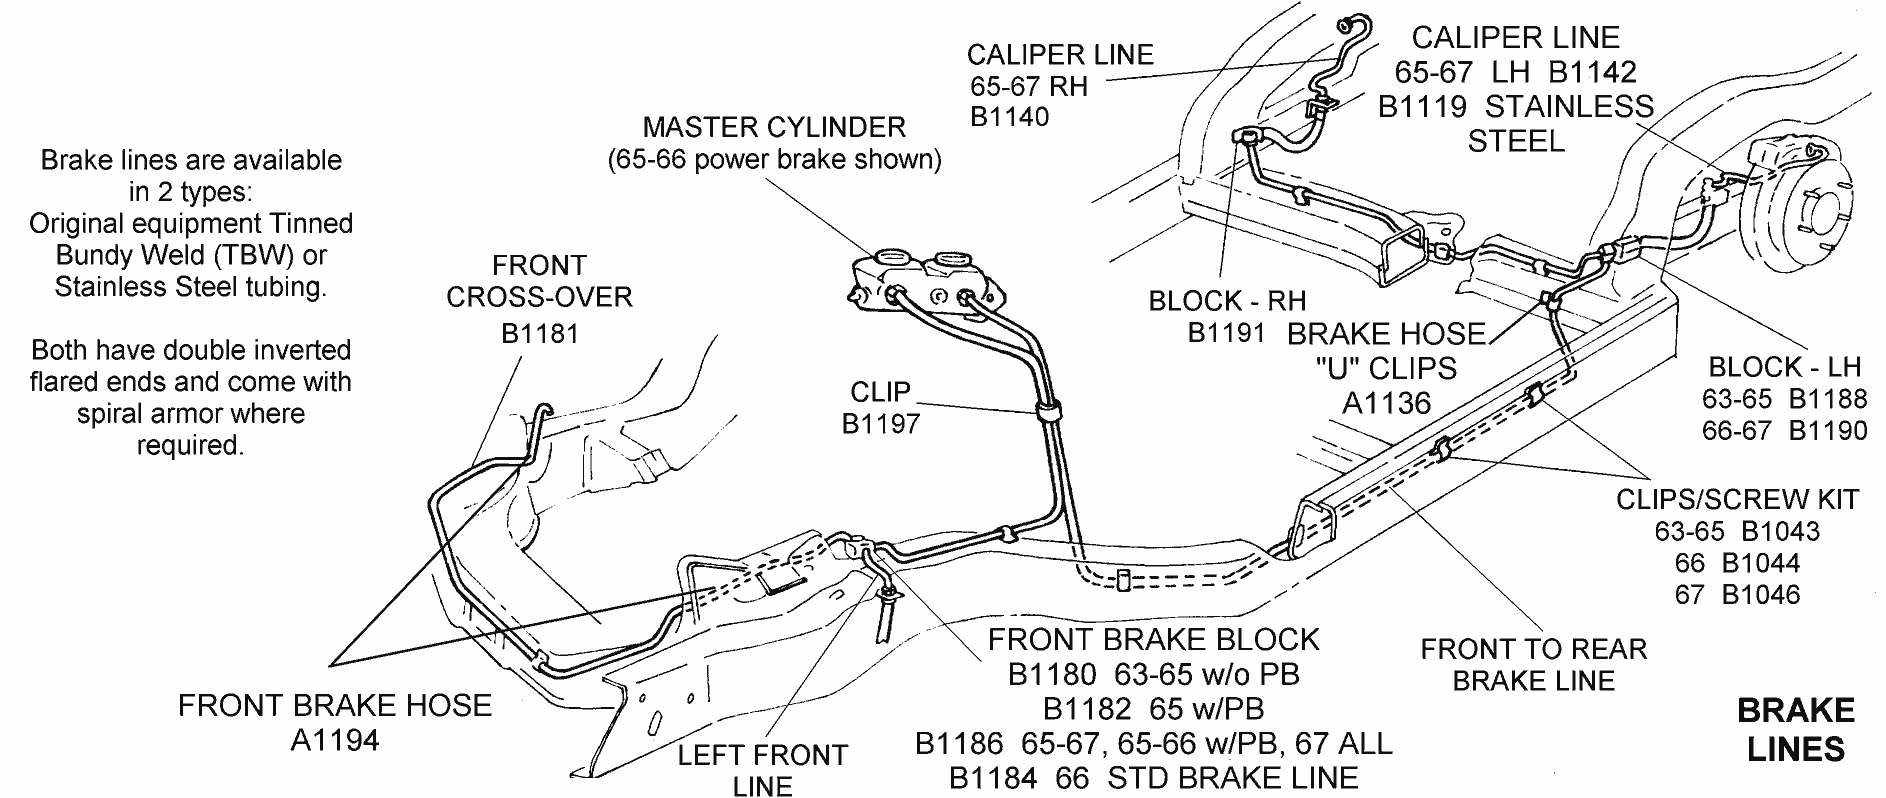 2002 Chevy Silverado Brake Line Diagram Pictures to Pin on Pinterest